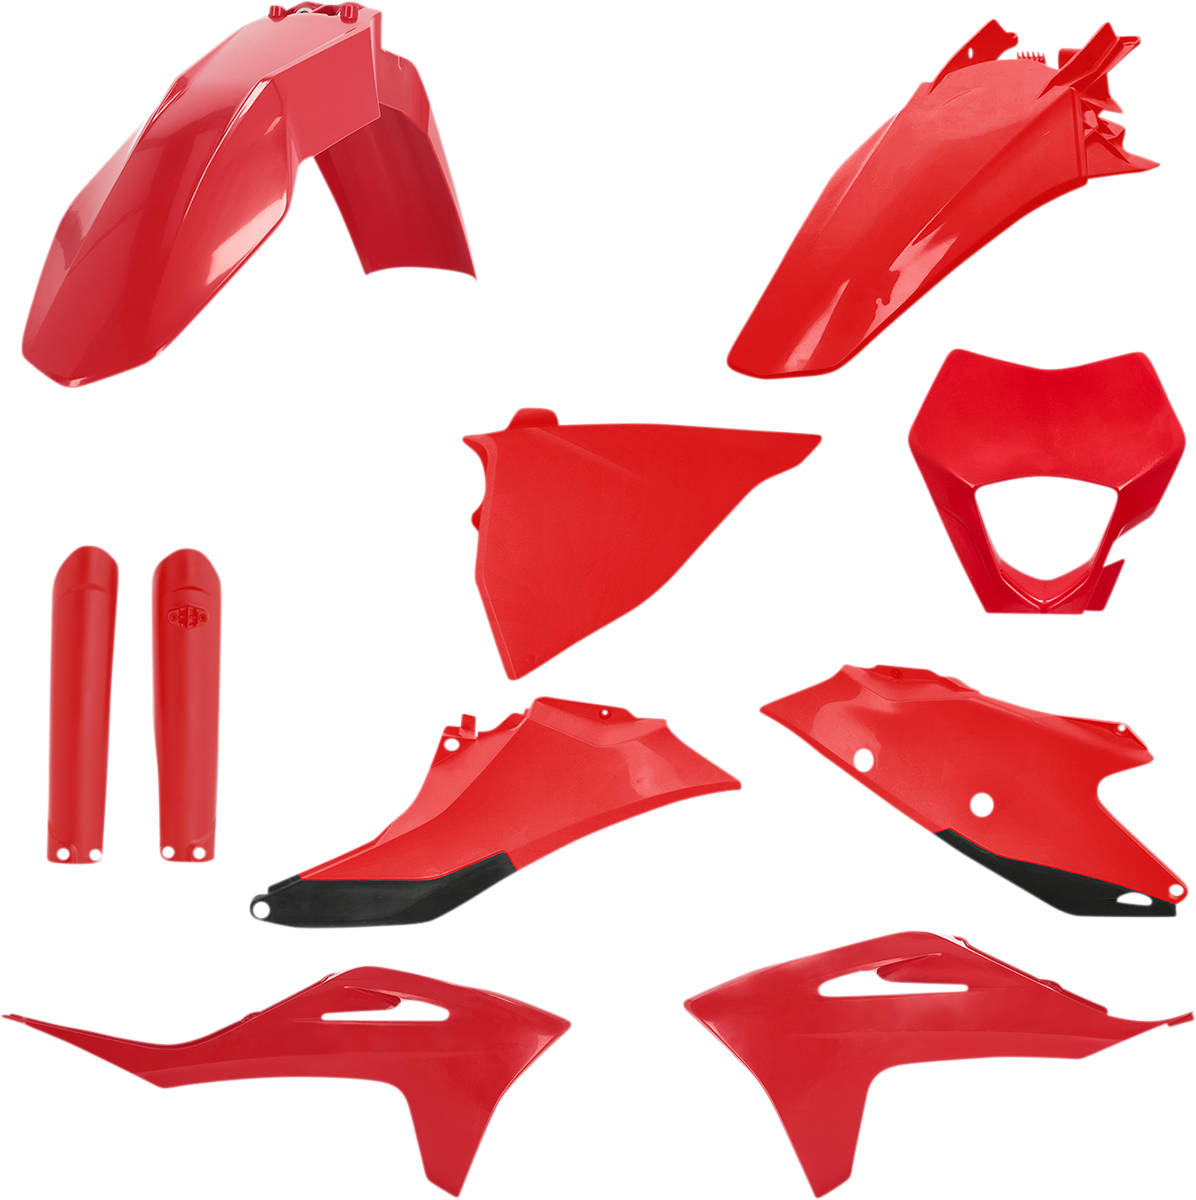 ACERBIS Full Replacement Body Kit - Red/Black 2872811018